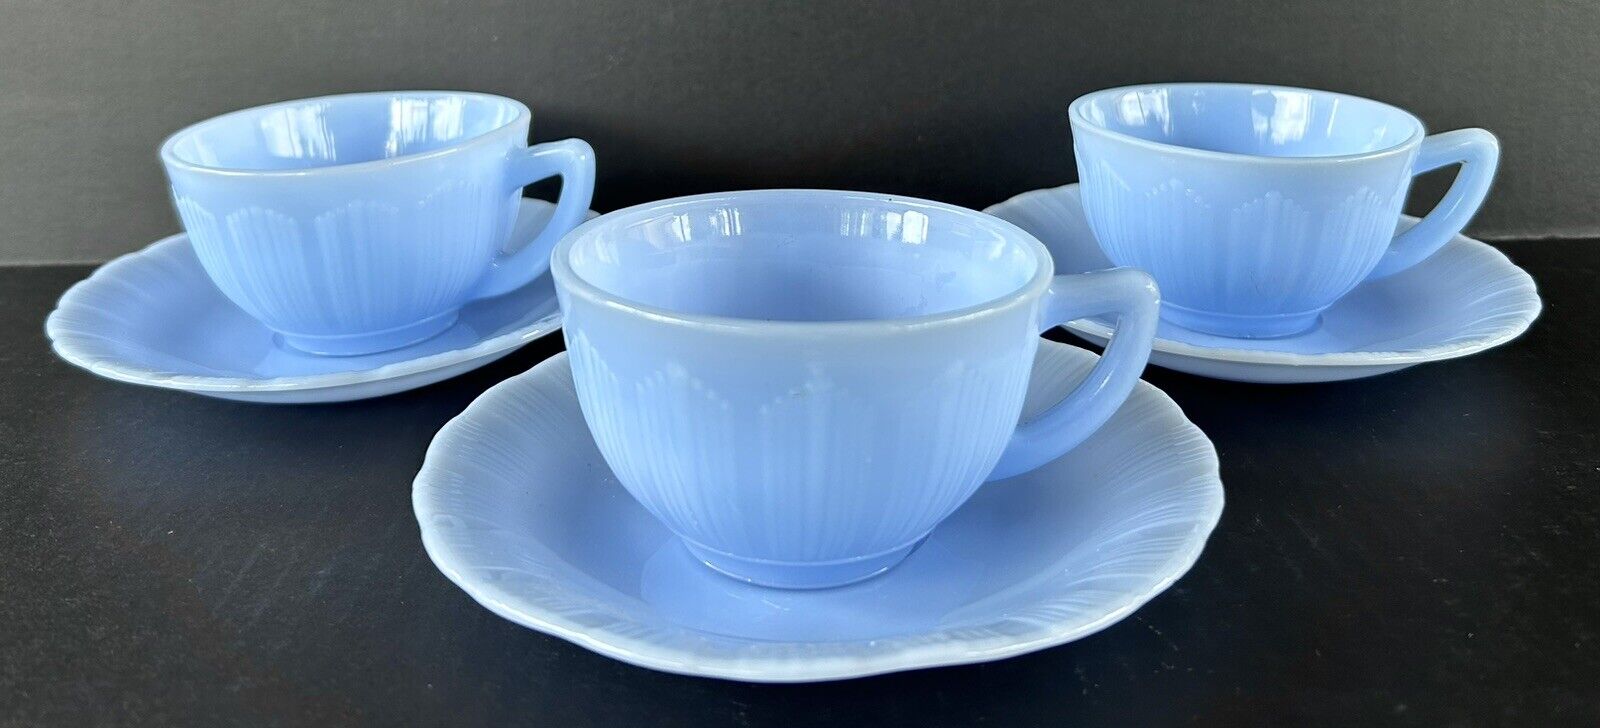 PYREX Delphite Blue Glass Pie Crust Cups & Saucers Set of 3 Canada